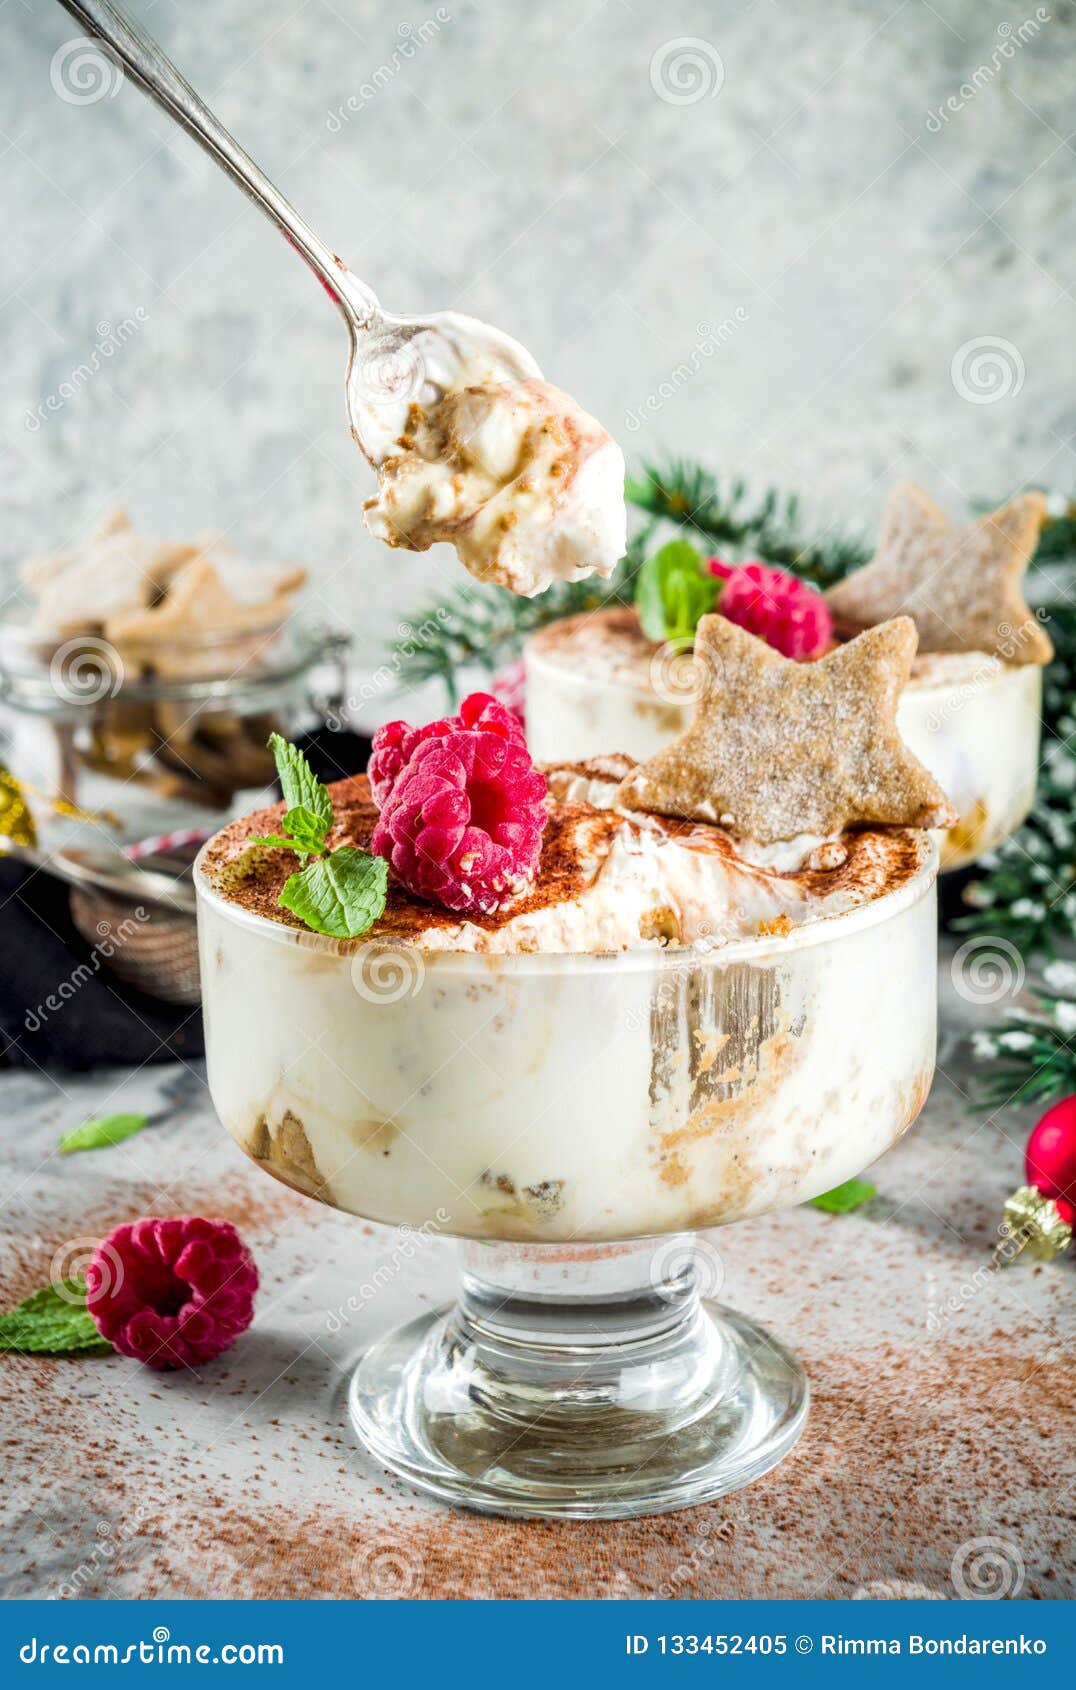 Gingerbread Tiramisu Trifle Stock Image - Image of delicious, decorated ...